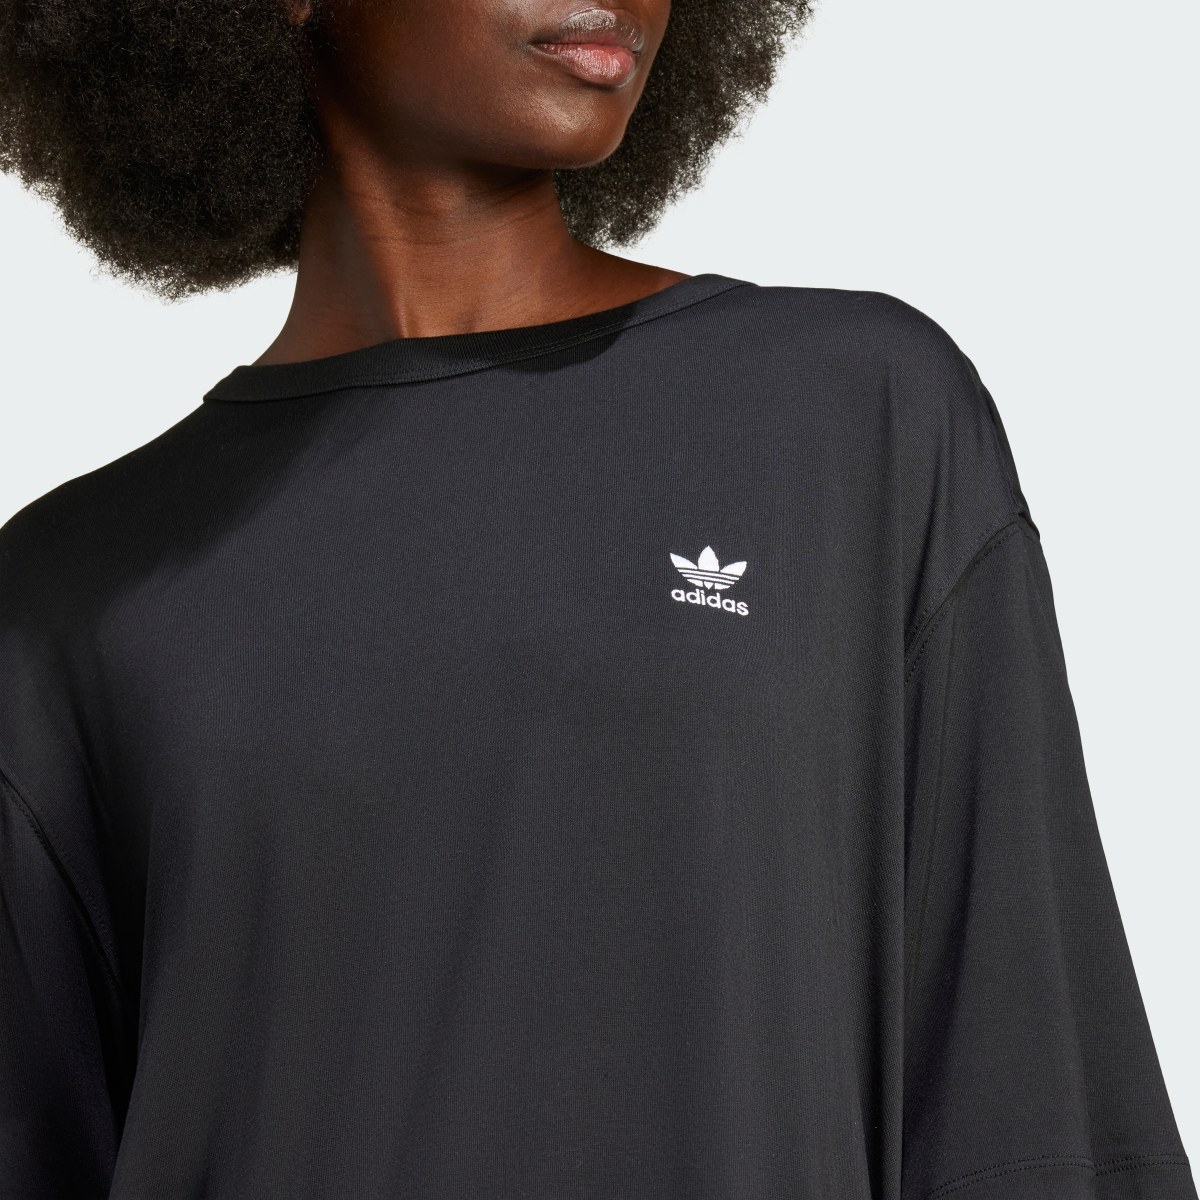 Adidas Trefoil T-Shirt. 6